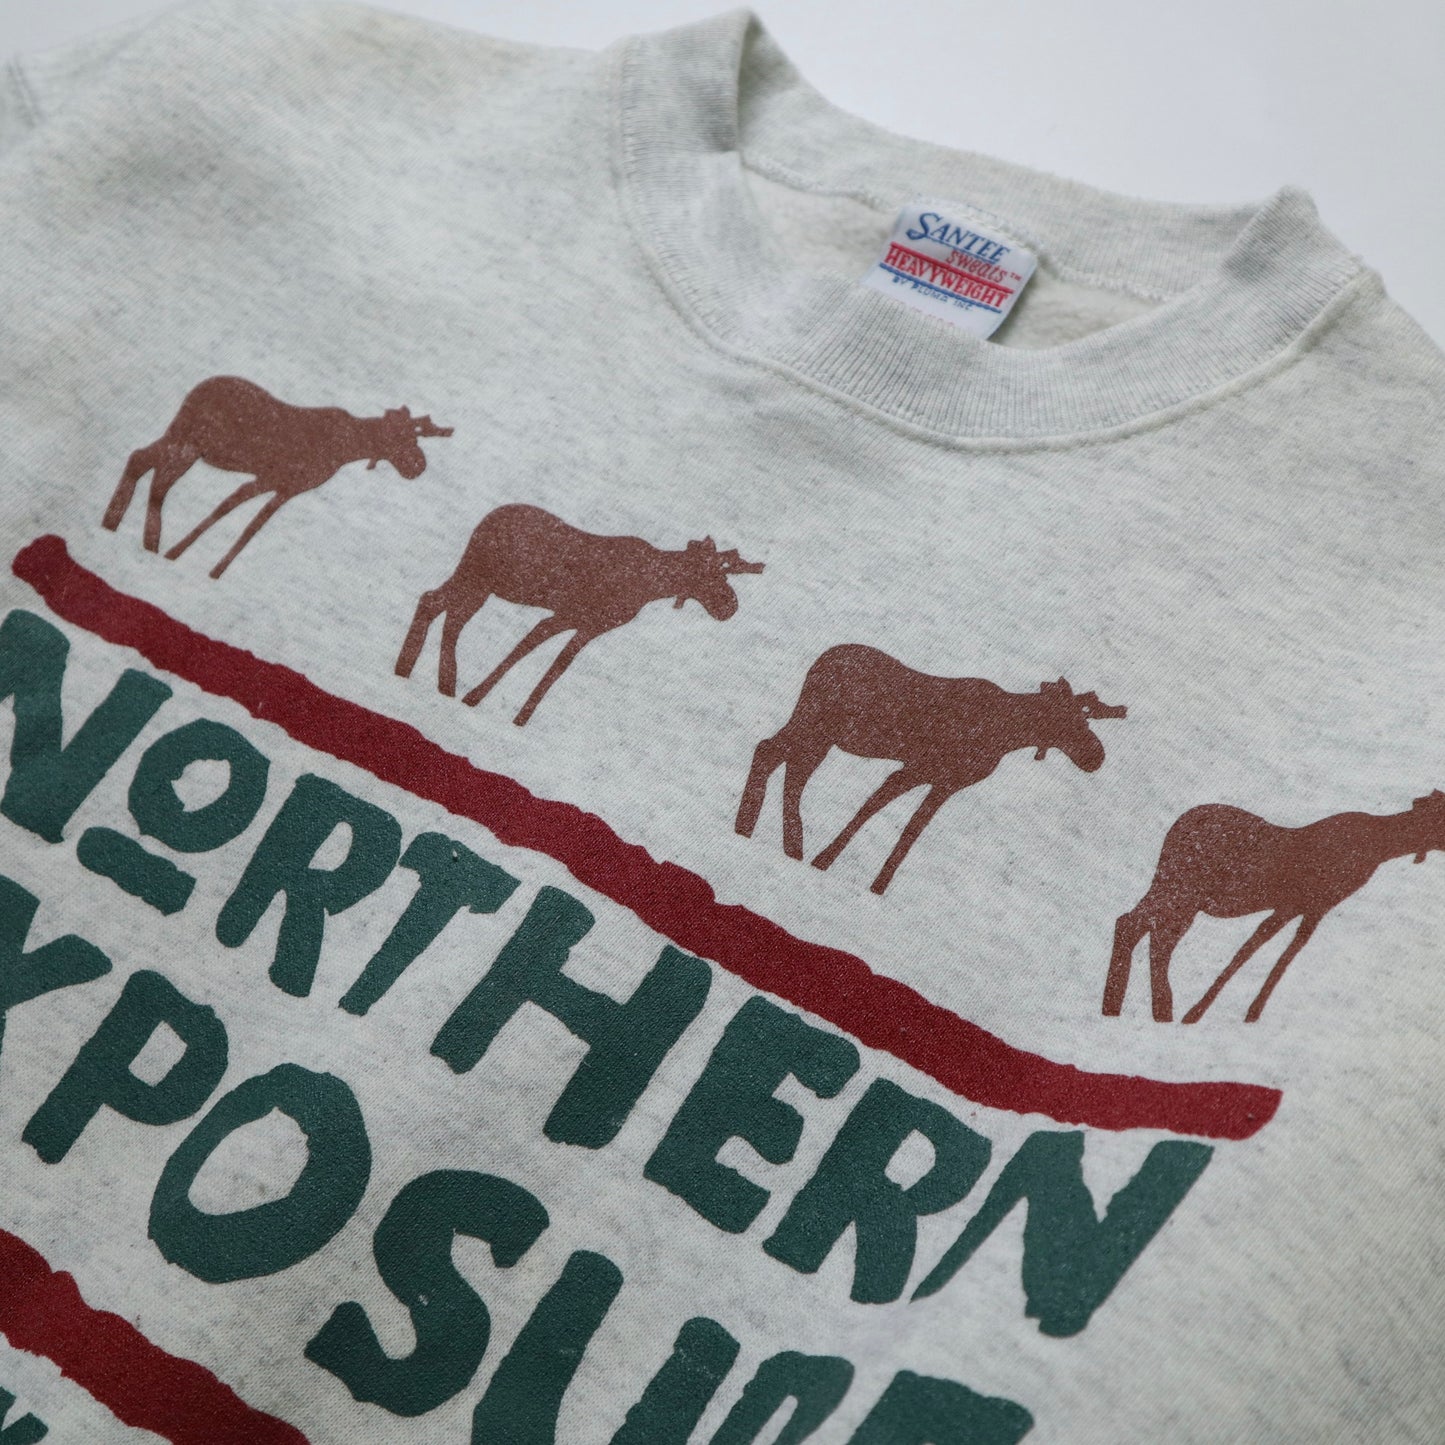 90s American-made American comedy Northern Exposure offset sweatshirt college tee